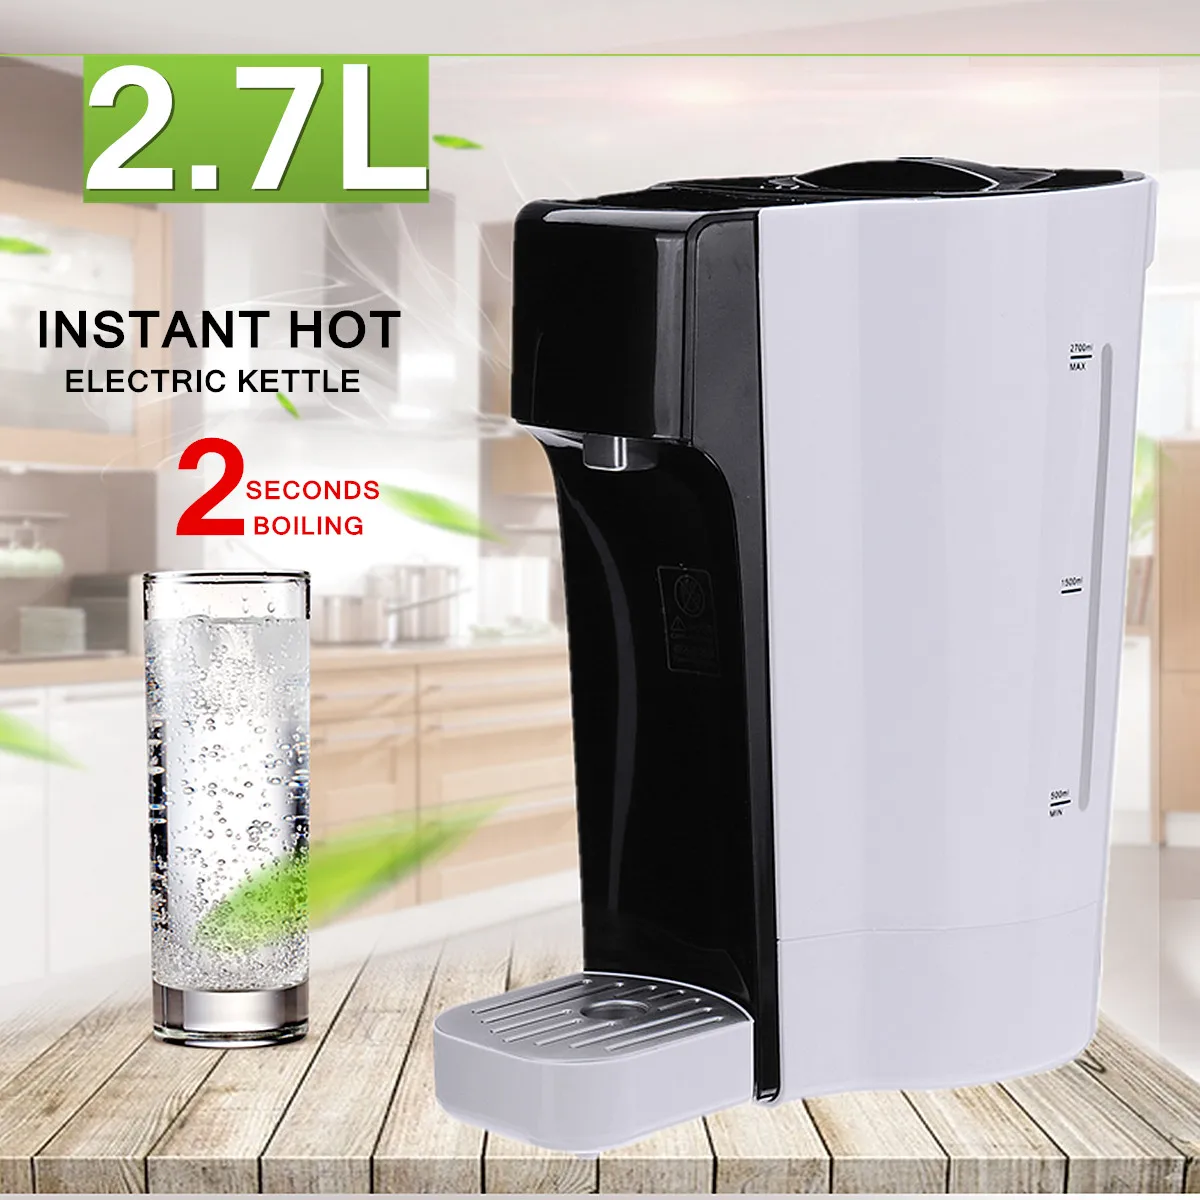 

Instant Hot Electric Kettle 2200W 2.7L Tea Coffee Maker Water Boiling Dispenser Machine Home Desktop Office Food Grade Screen